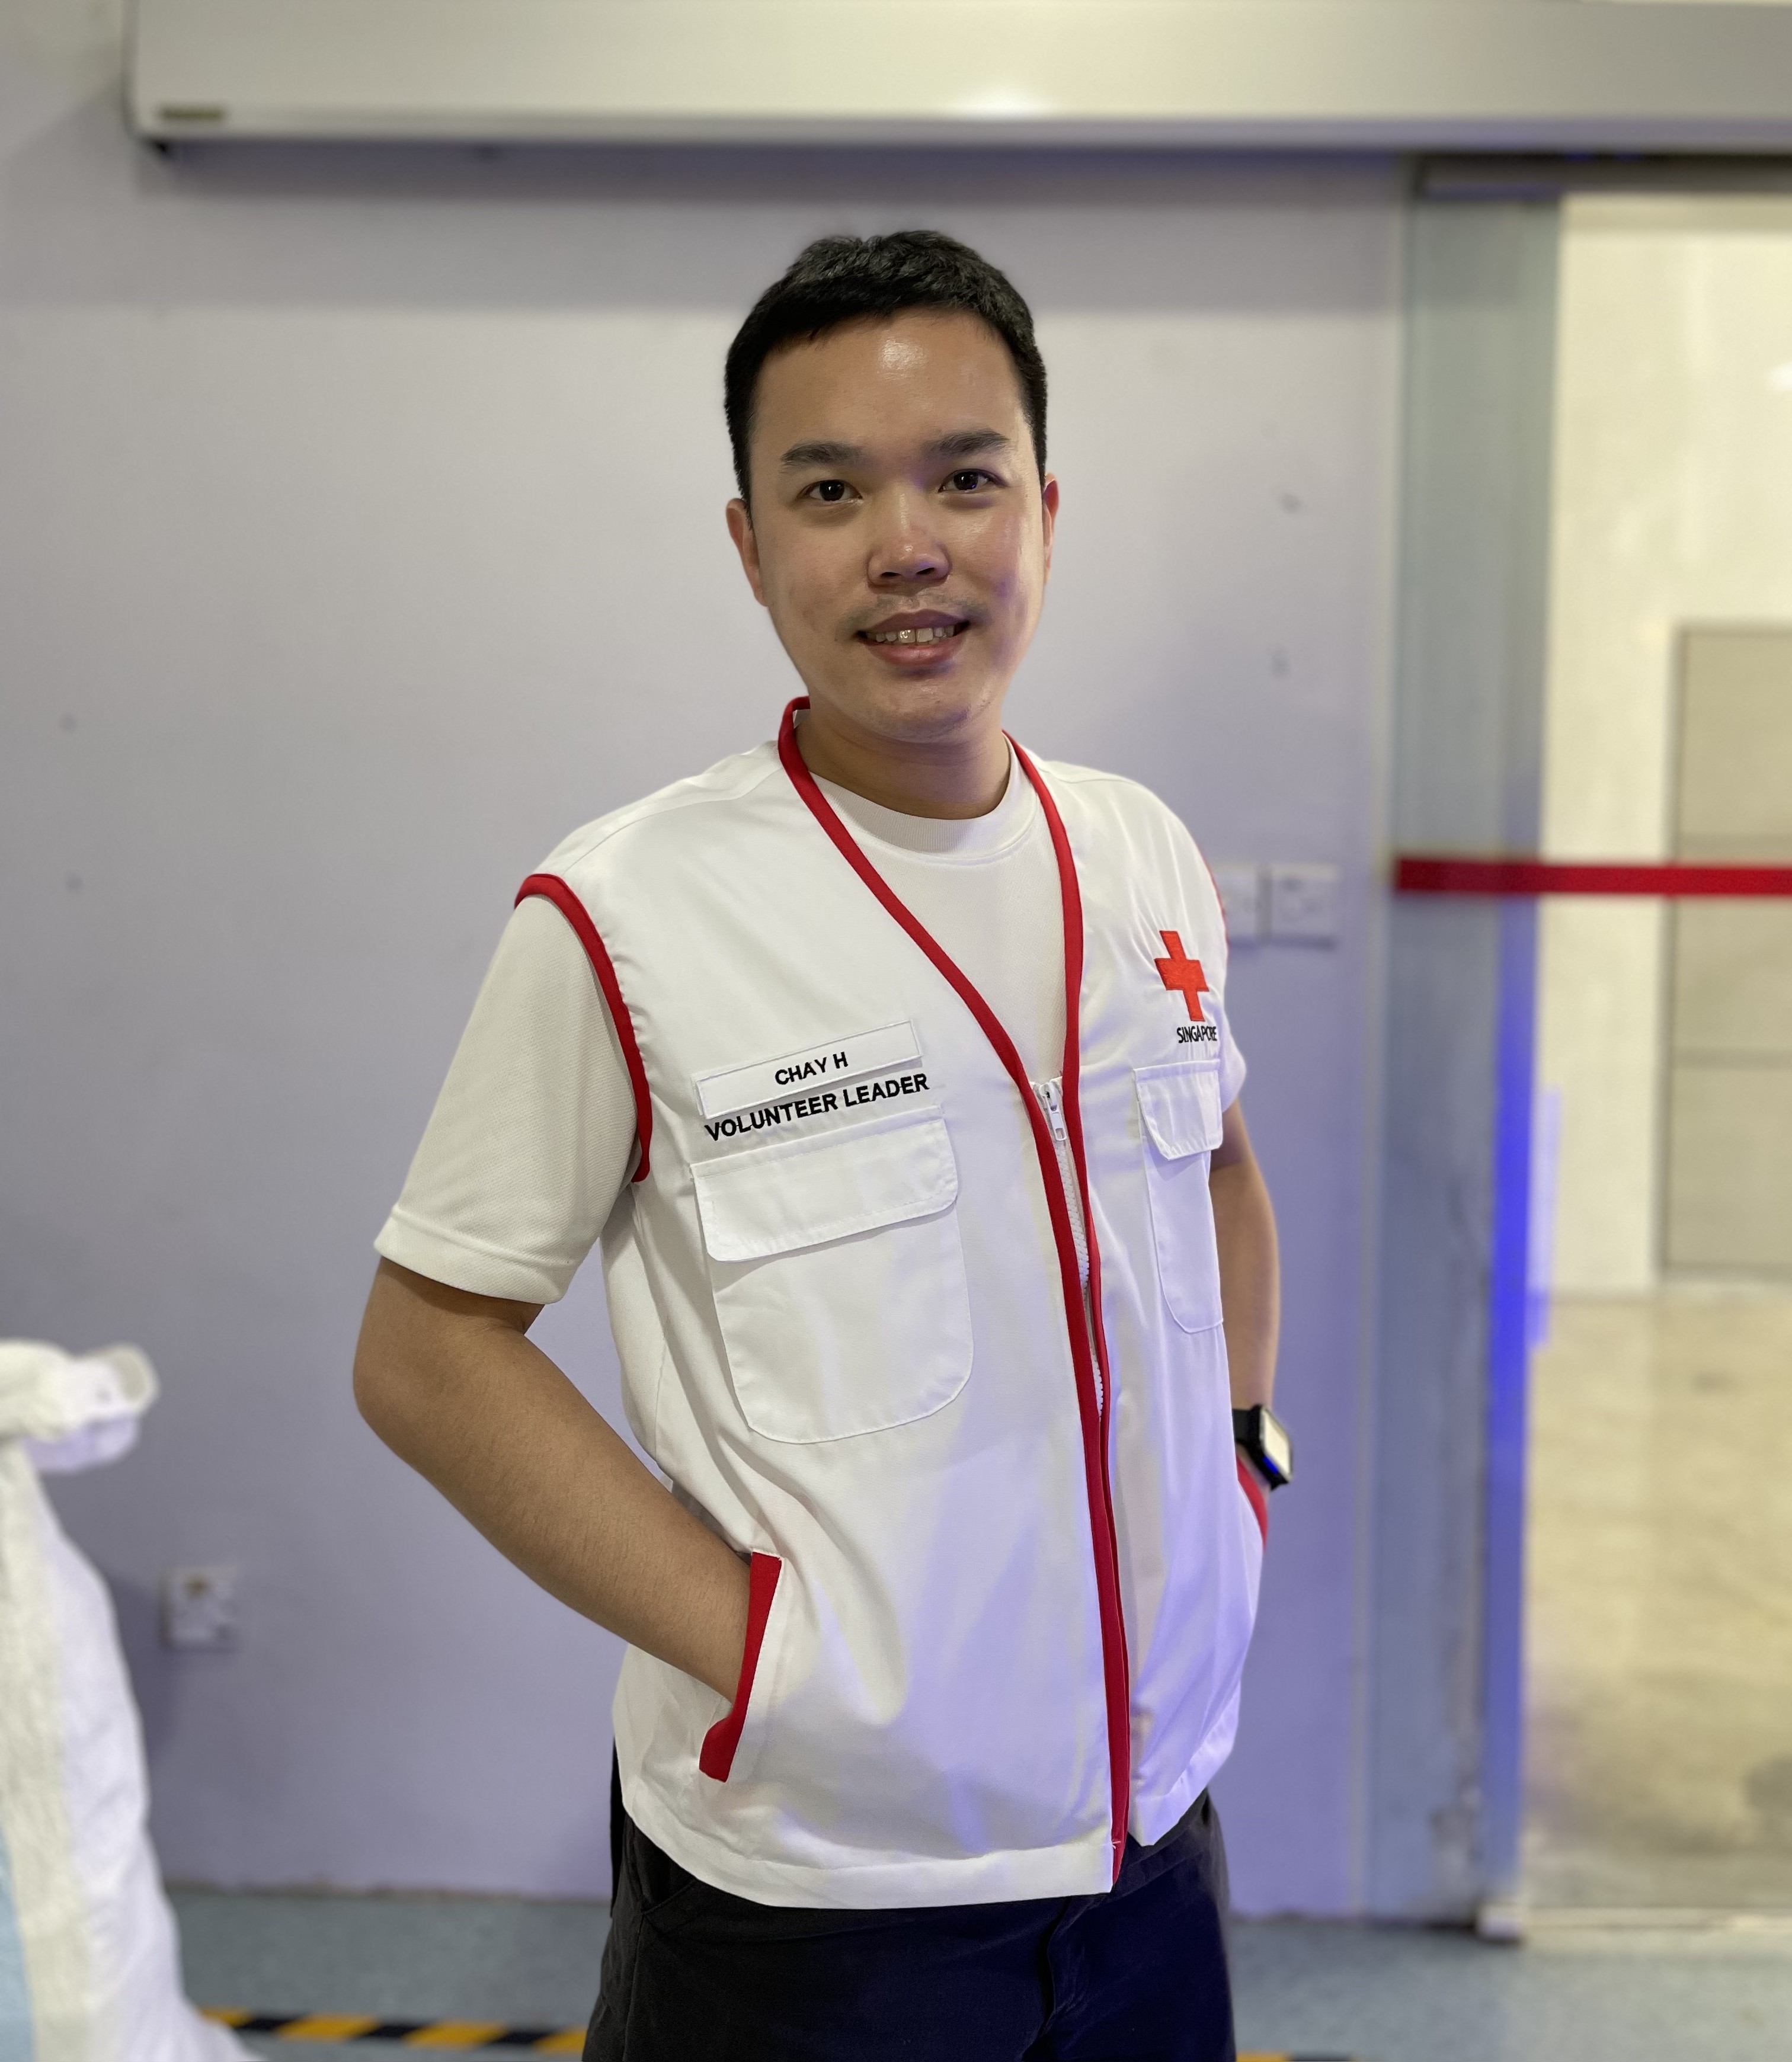 Singapore Red Cross Volunteer Chay Him 1